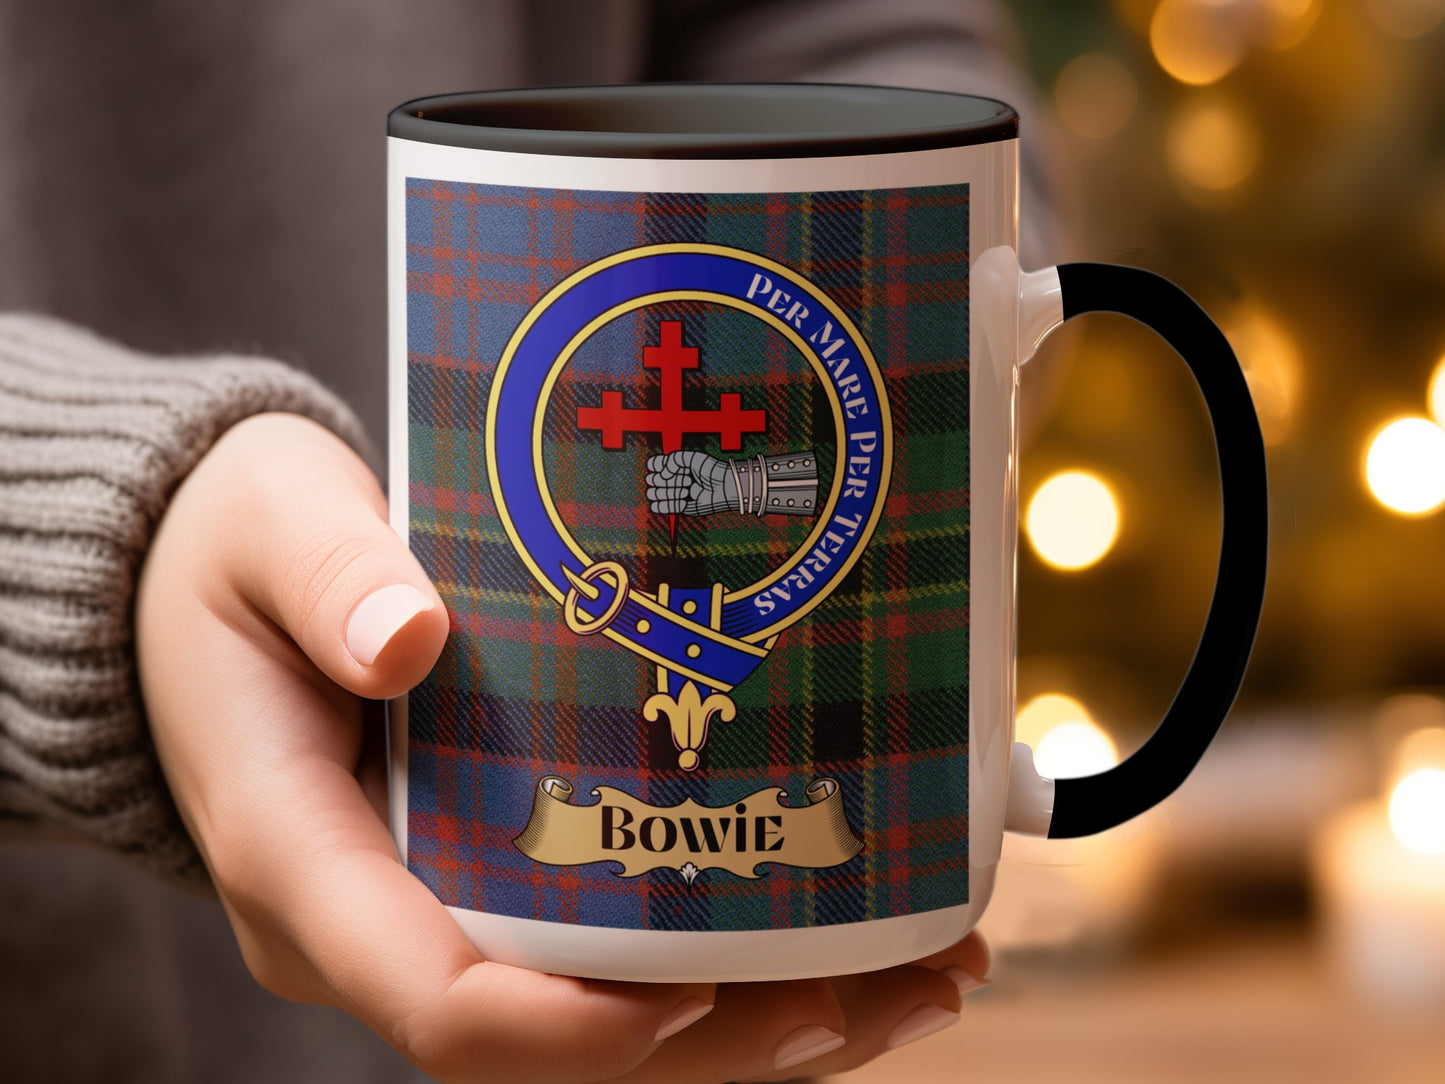 Scottish Clan Crest Tartan Design Bowie Mug - Living Stone Gifts